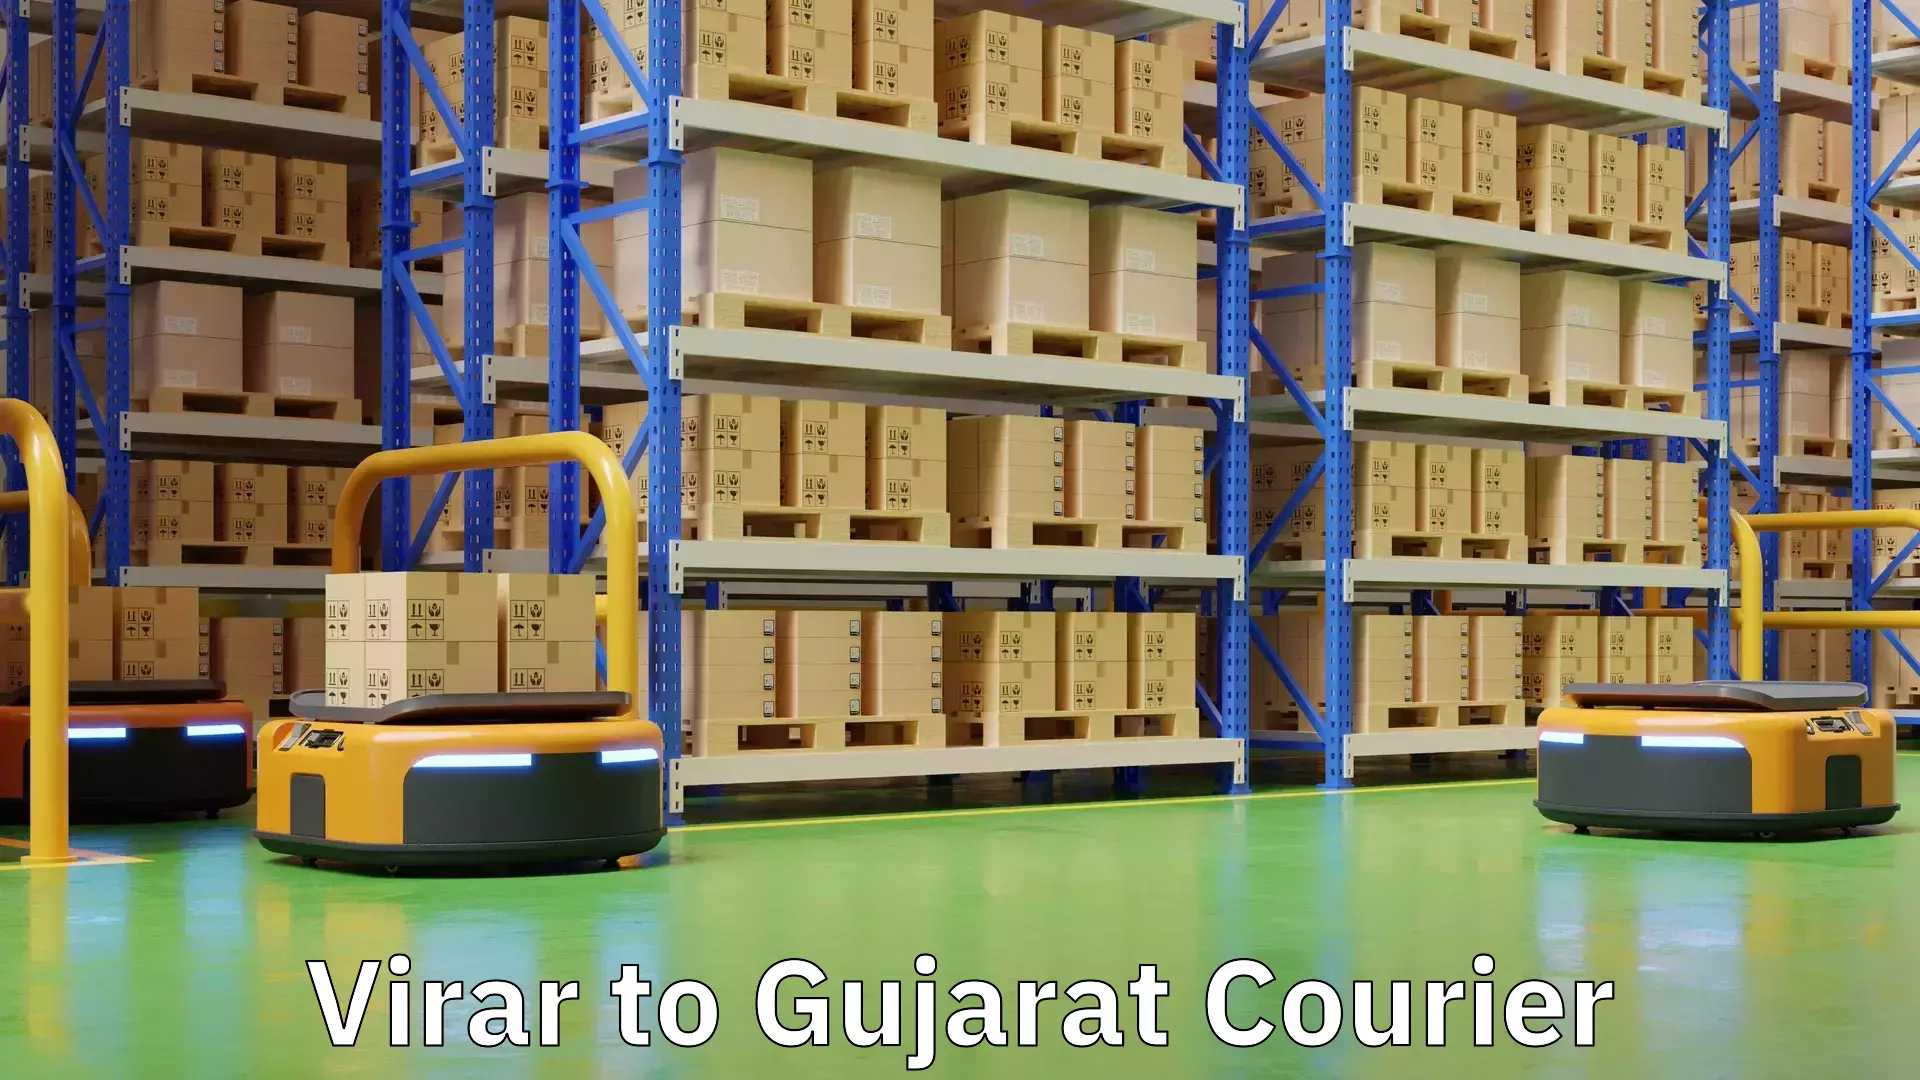 Courier service innovation Virar to Gujarat